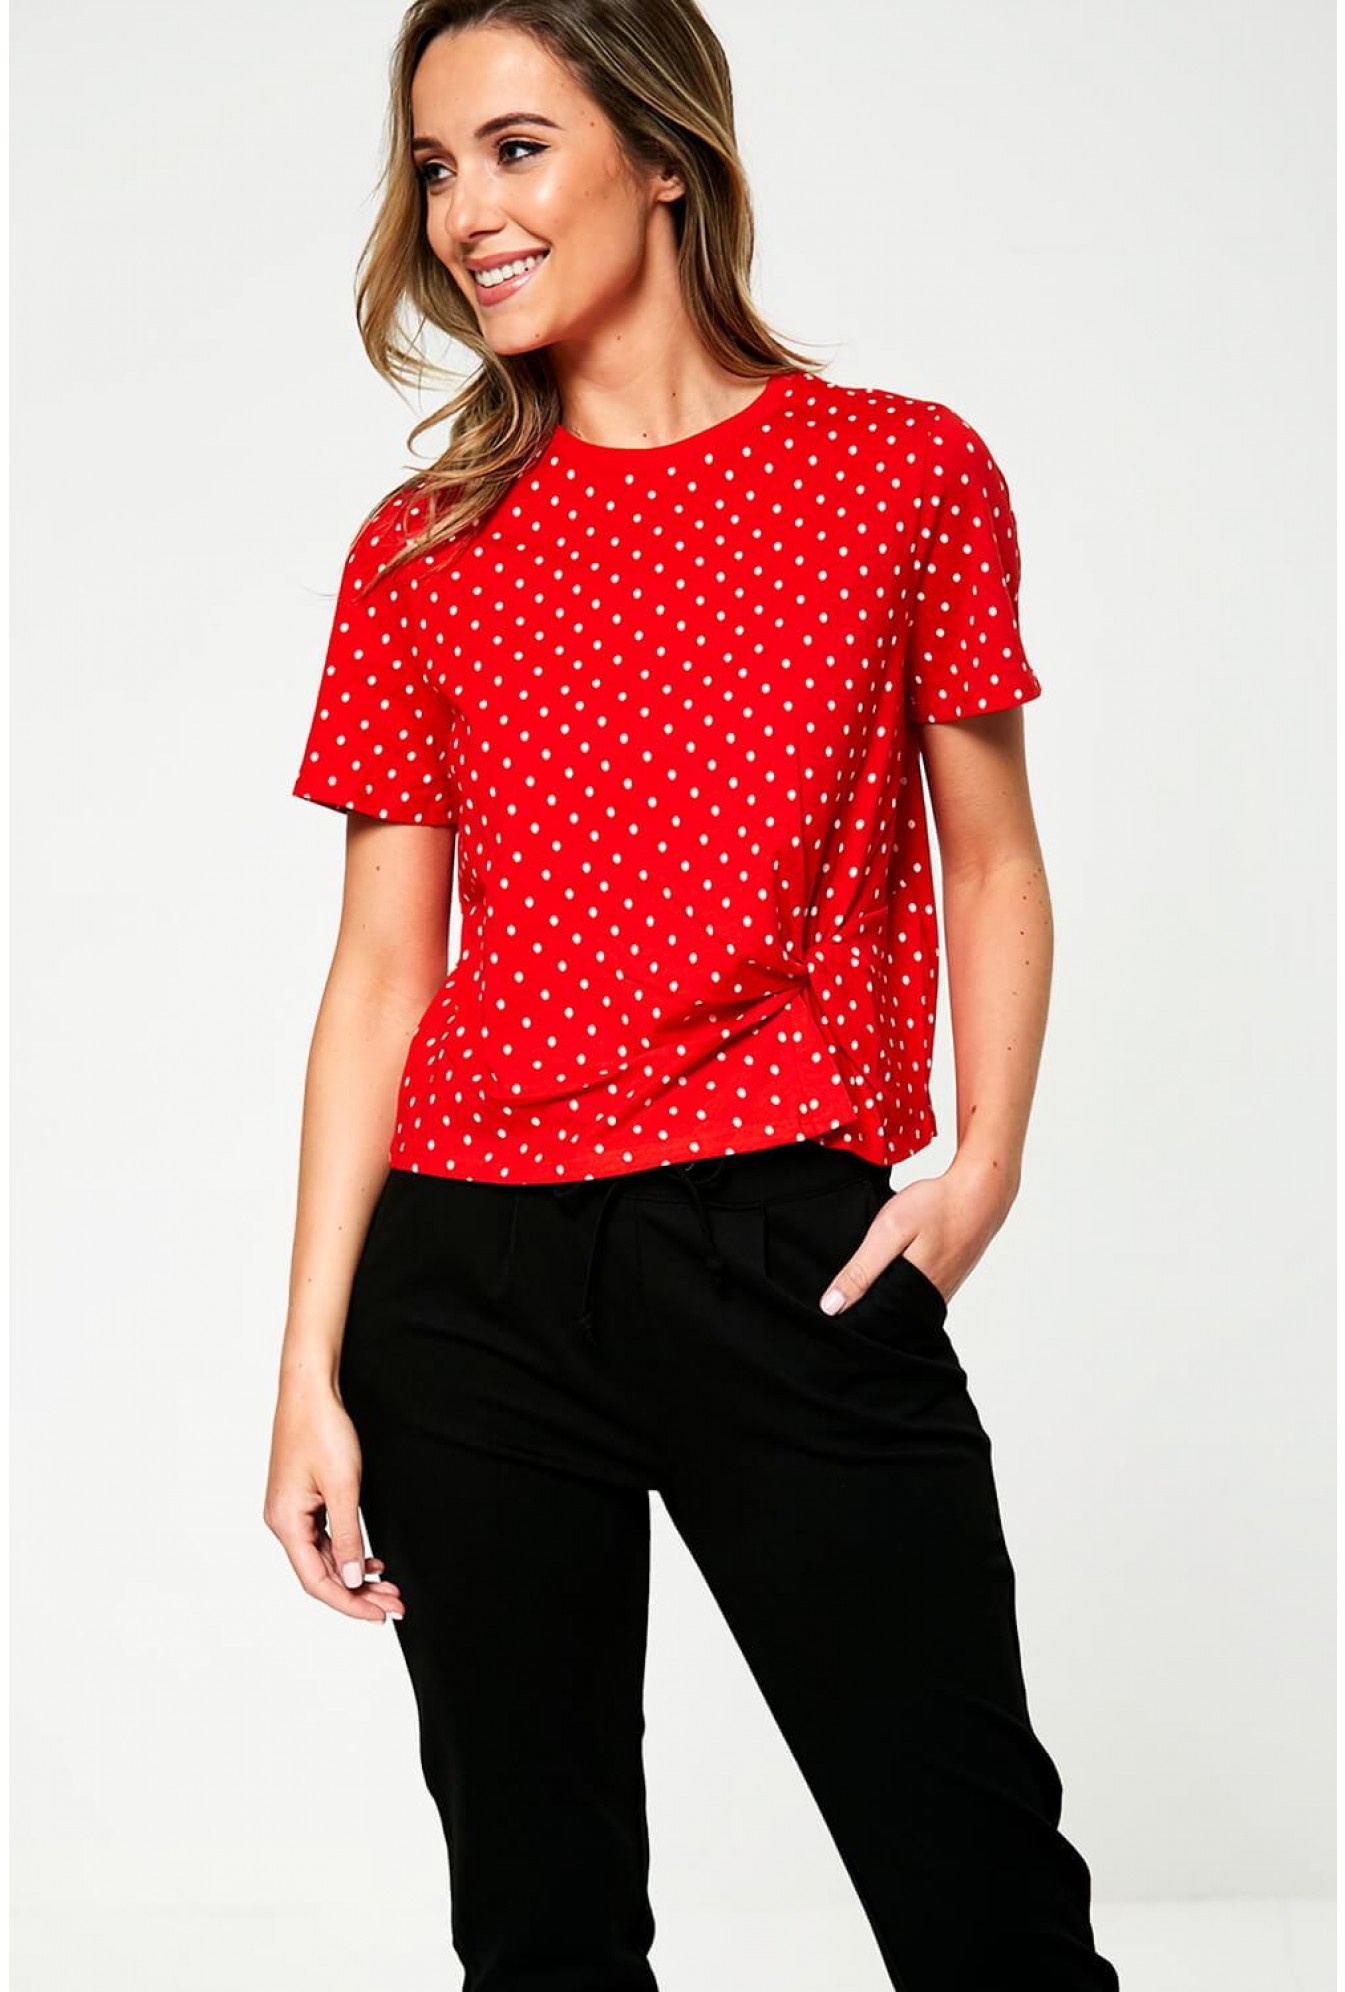 red polka dot t shirt